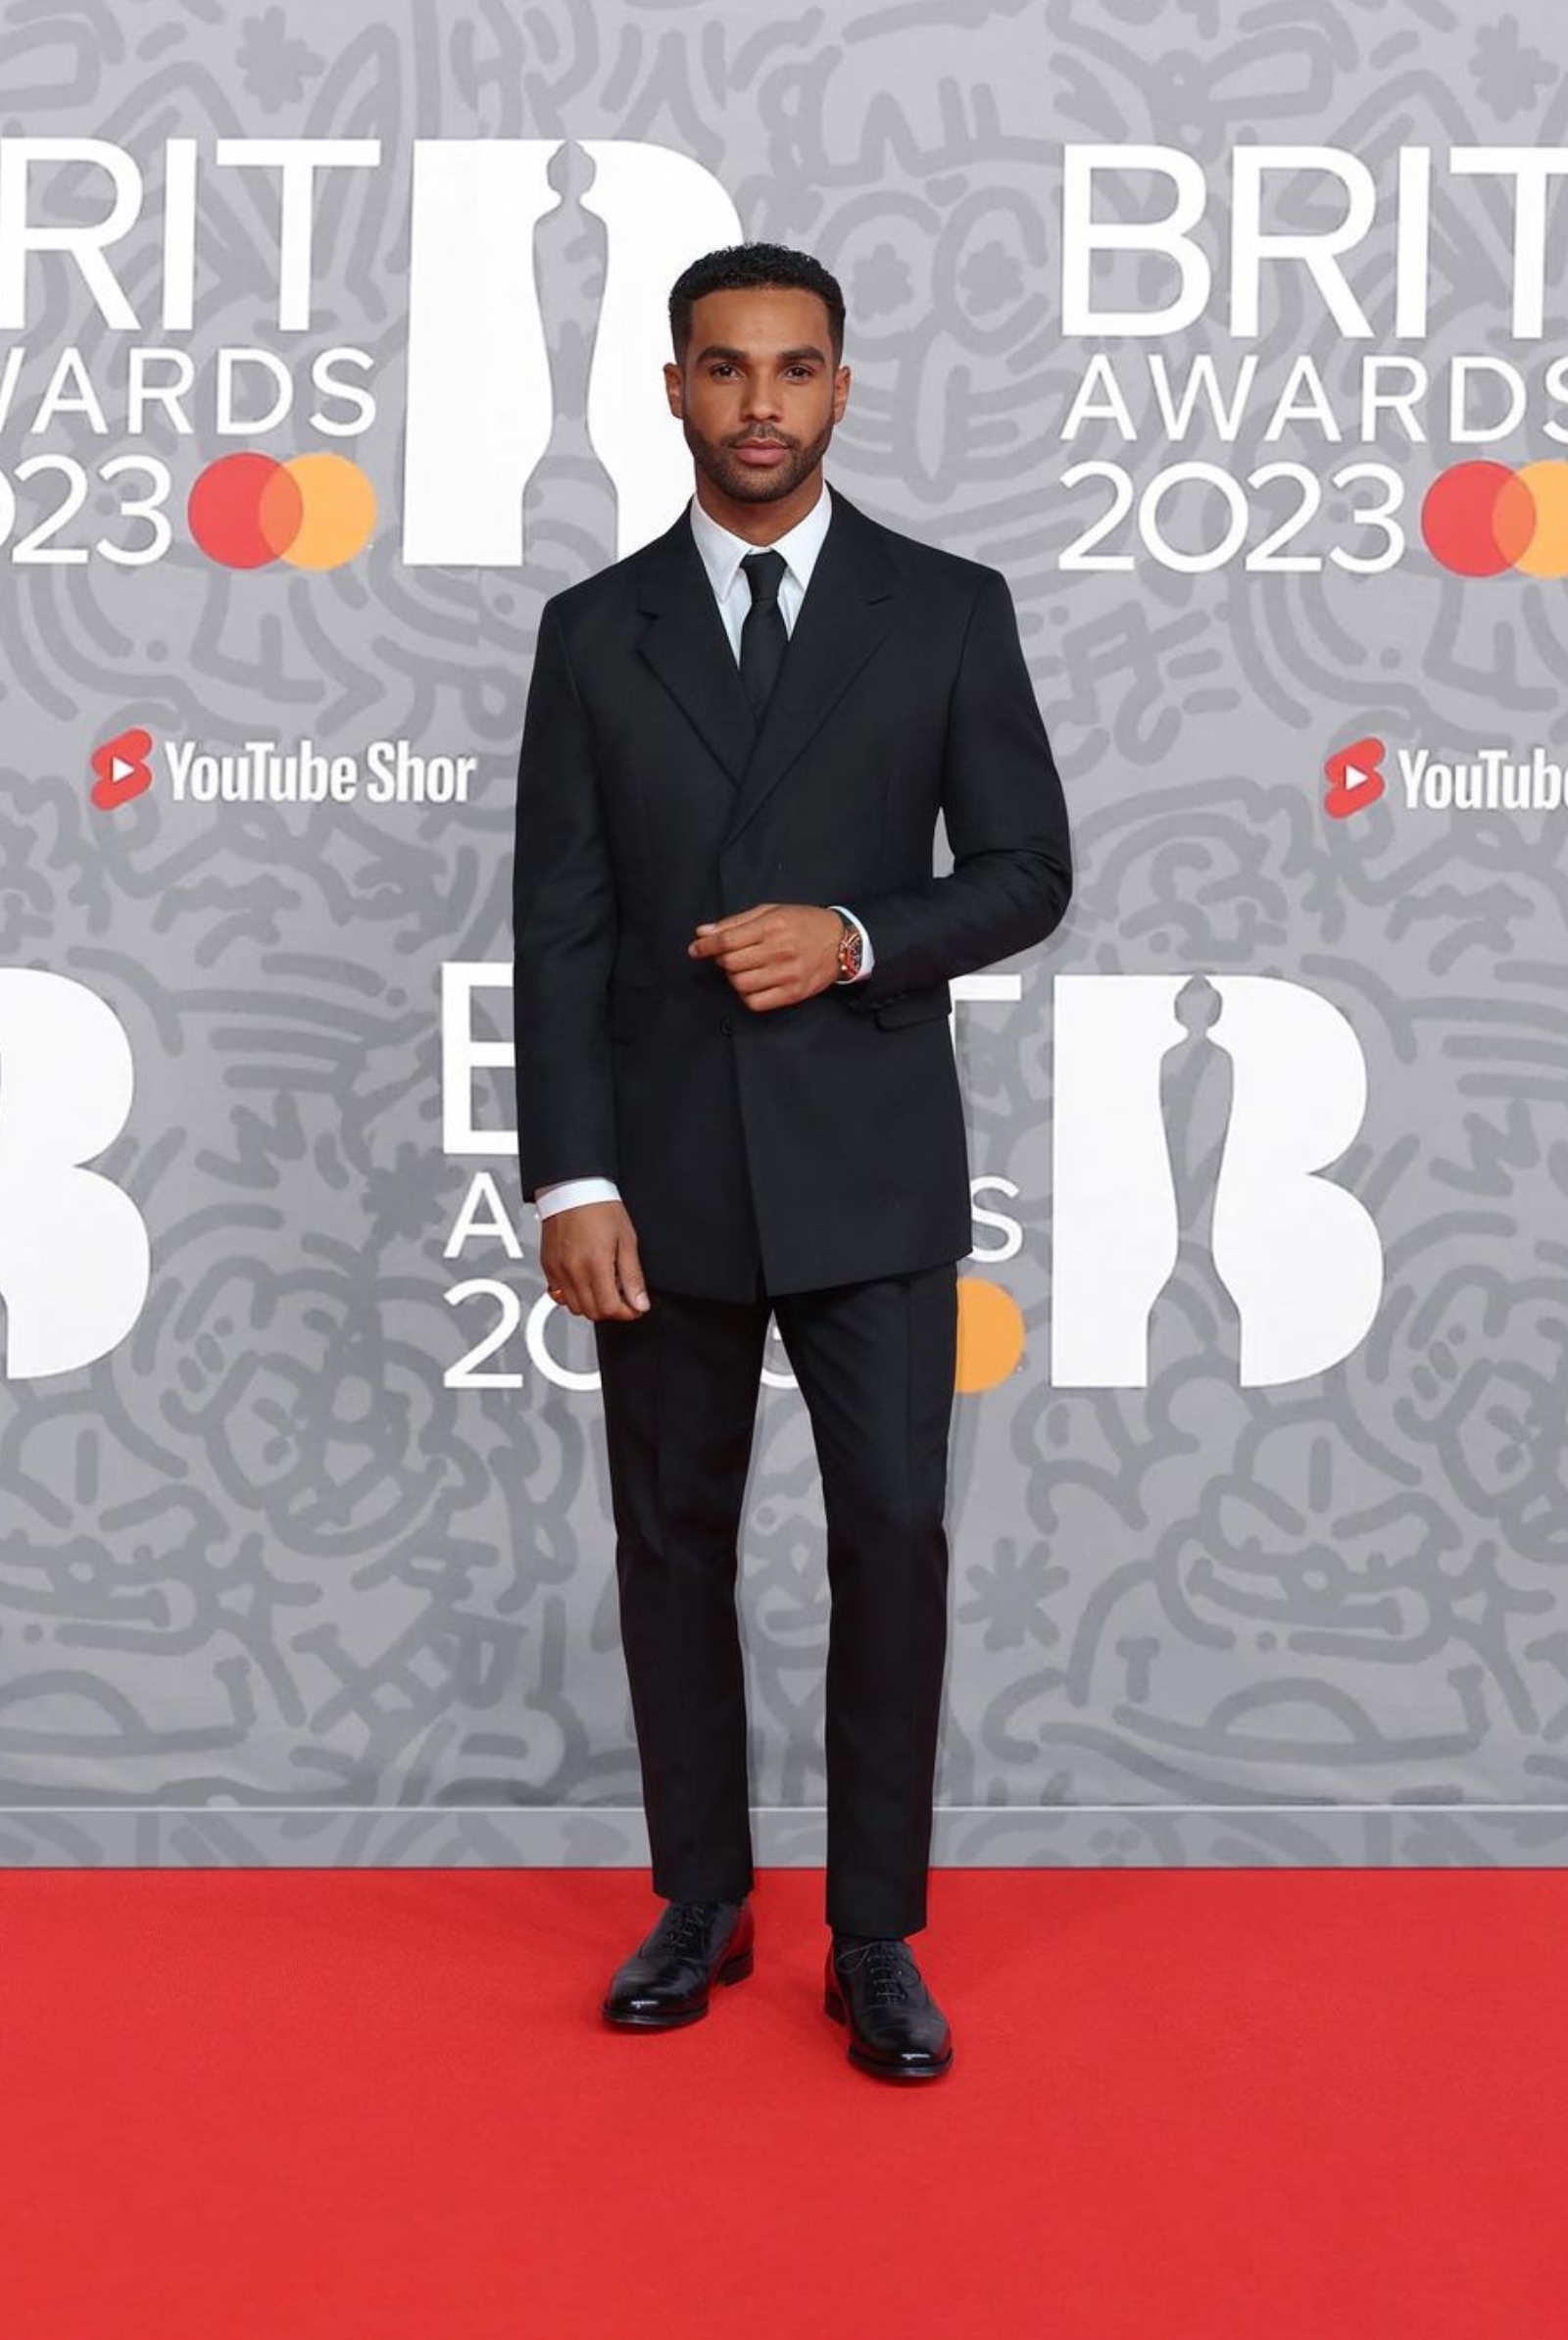 Best Dressed Men at the 2023 Brit Awards - Lucien Laviscount